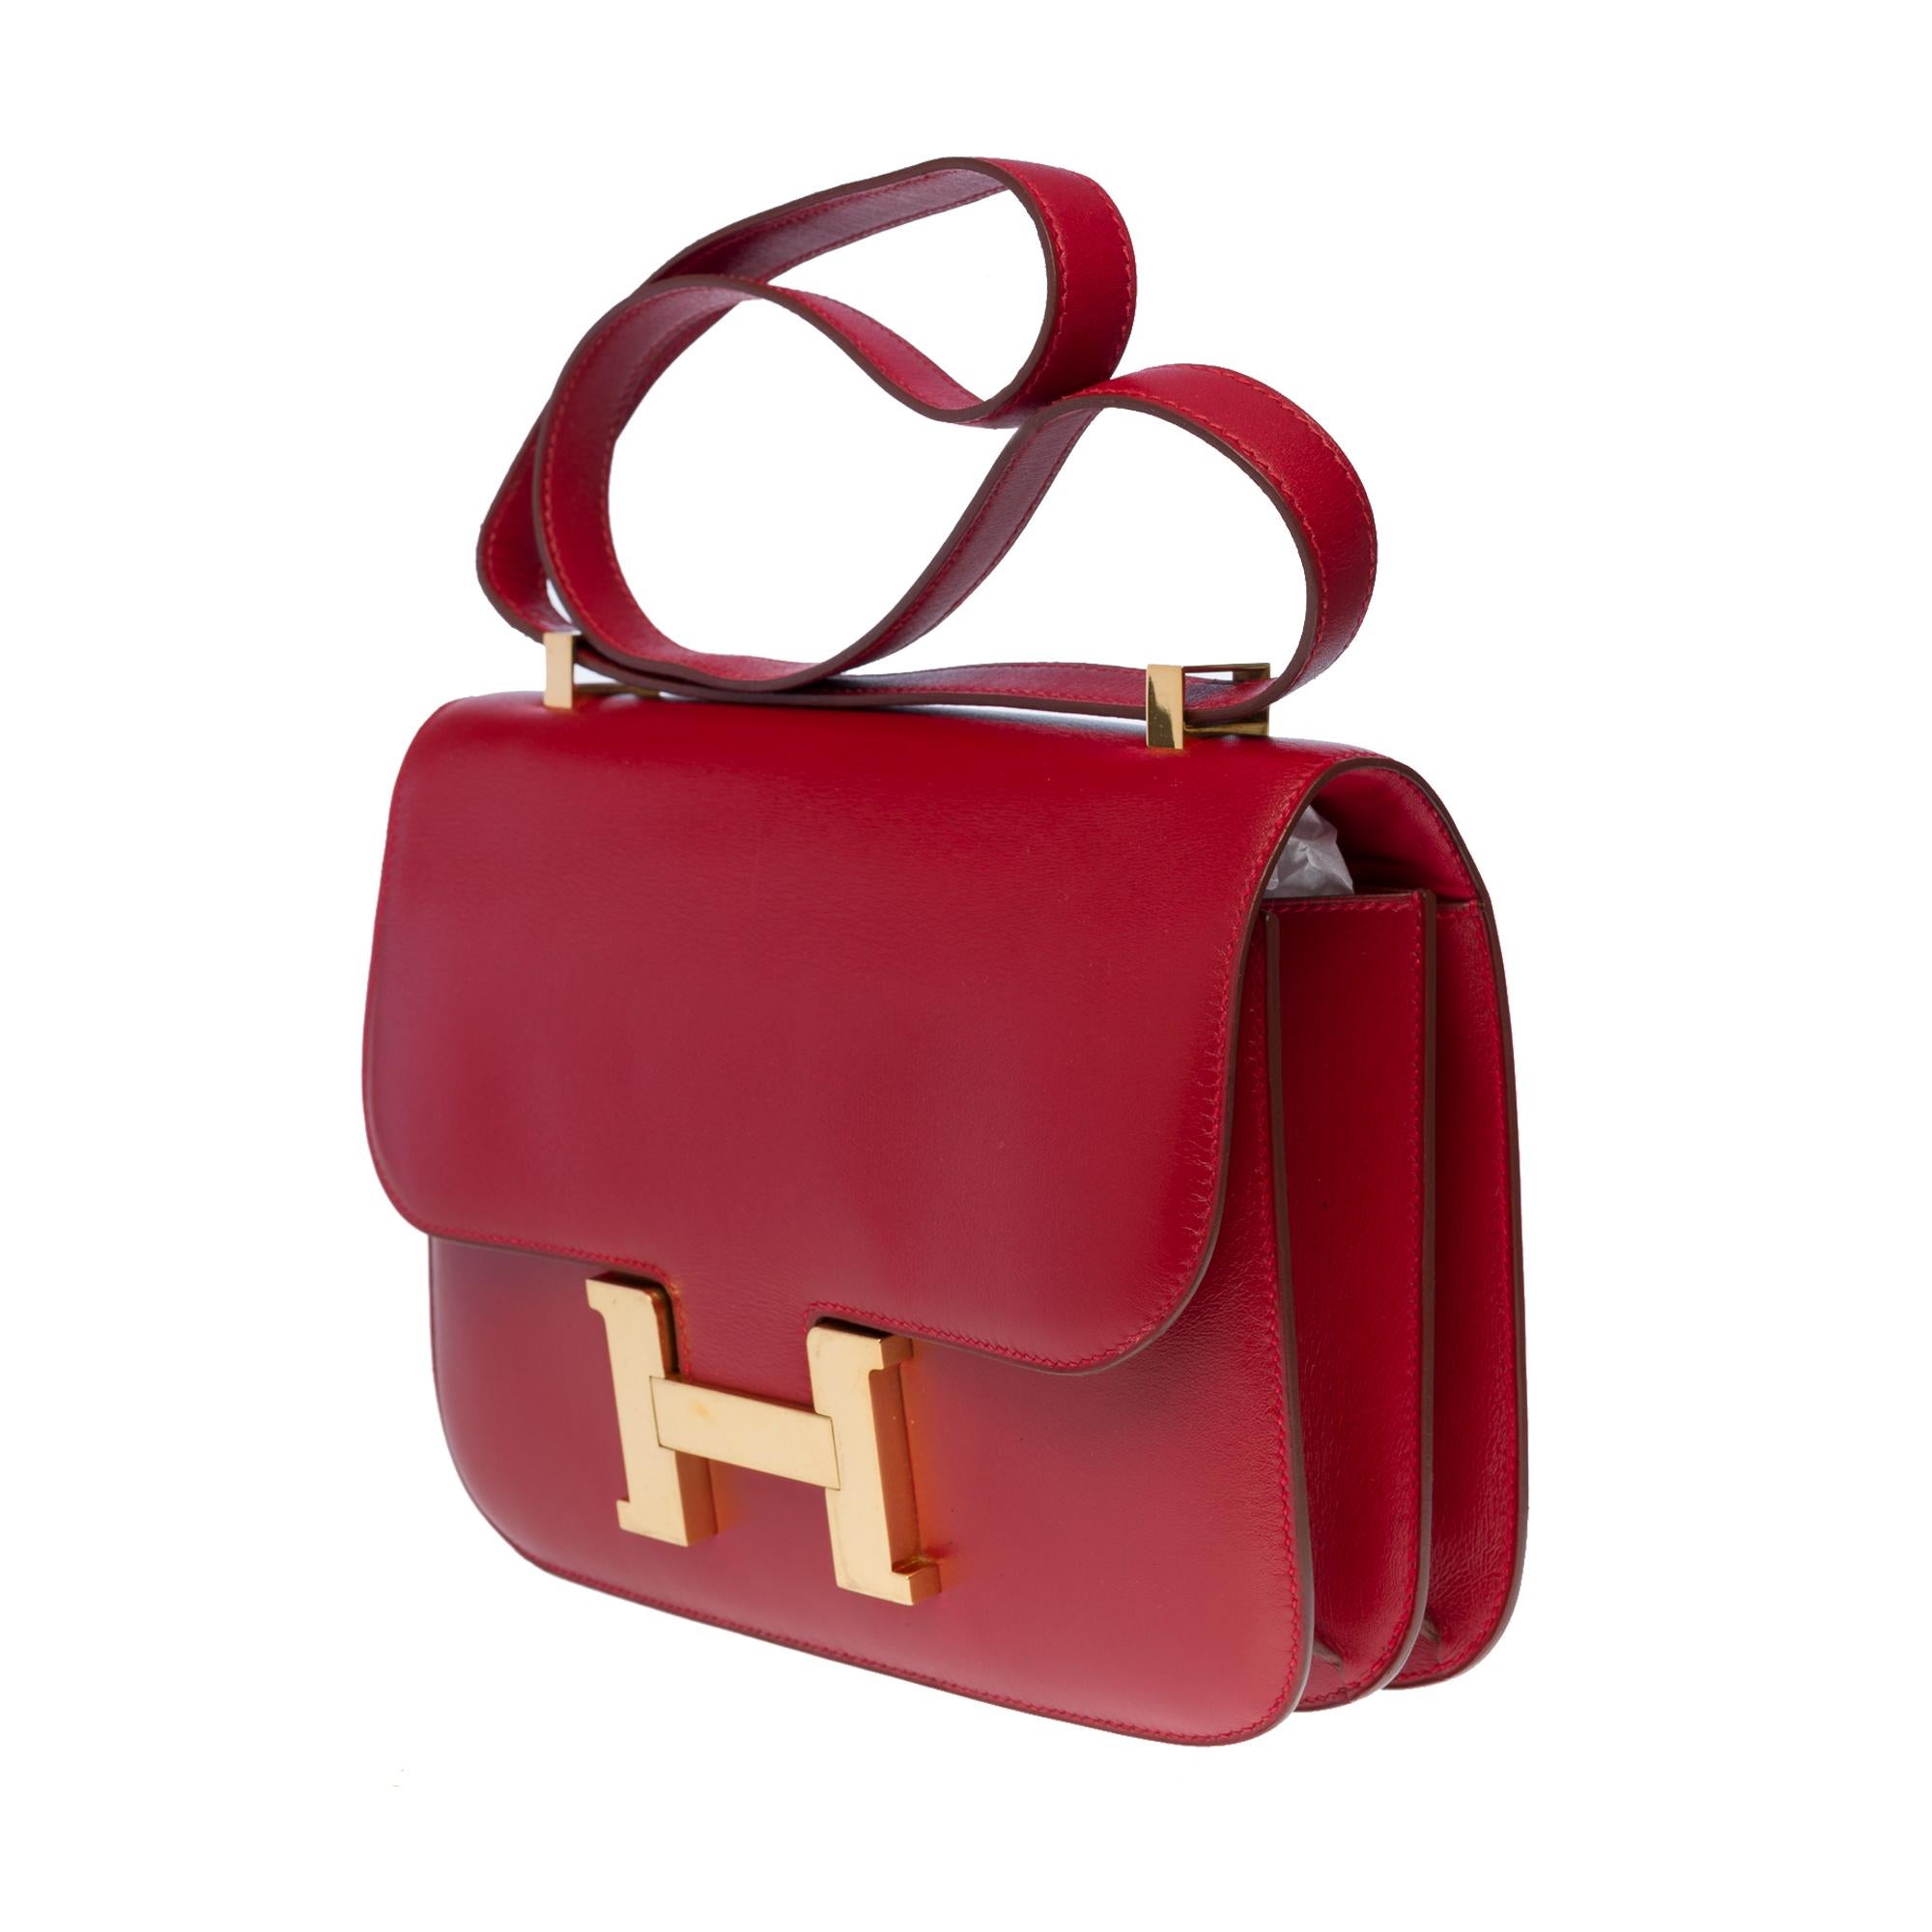 hermès constance bag price